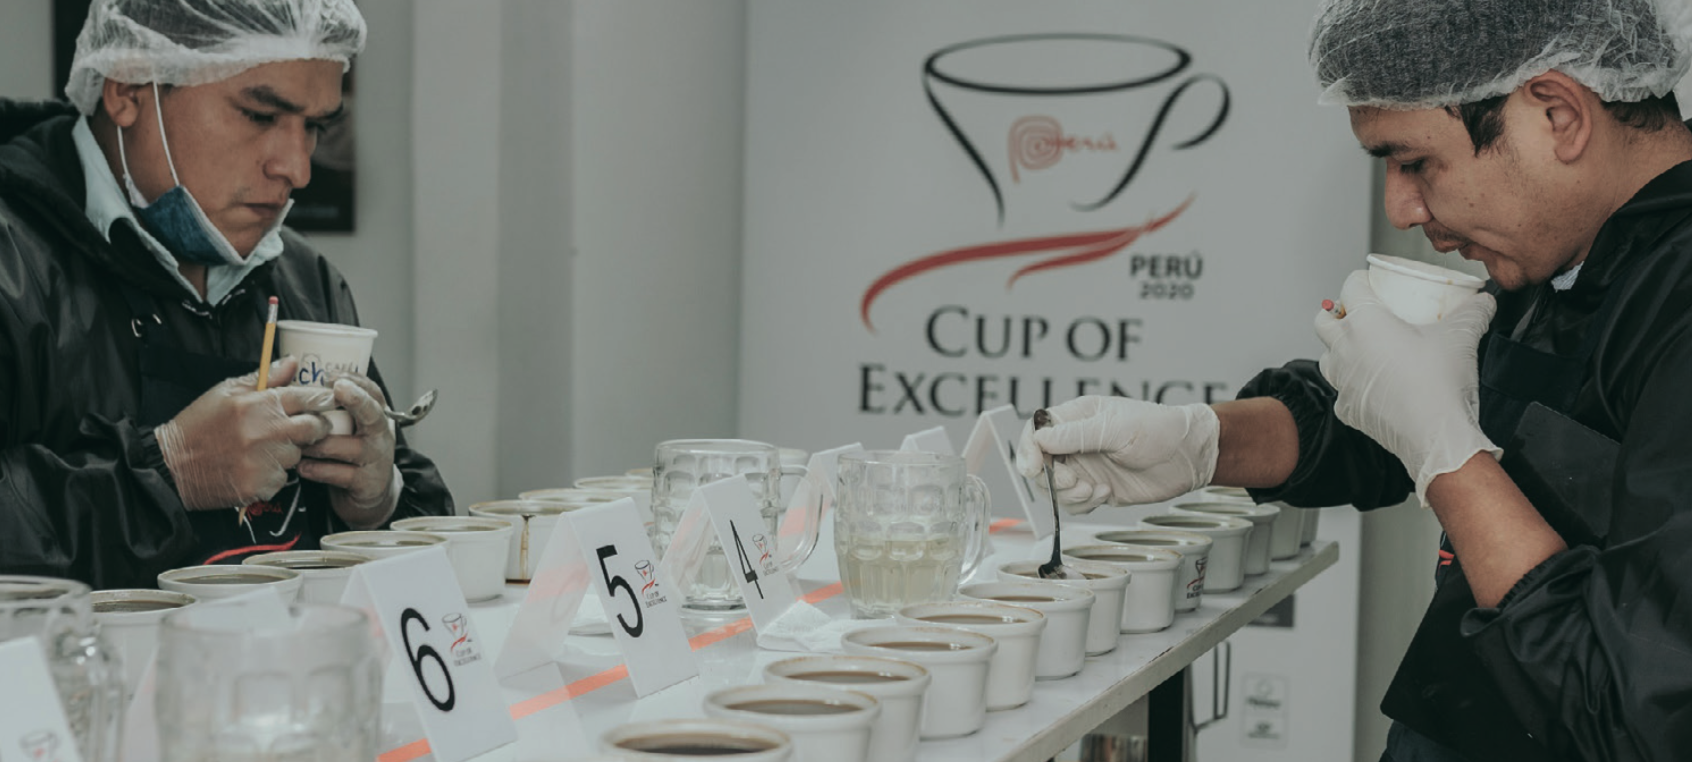 nuevo-cafe-peruano-forum-cafe